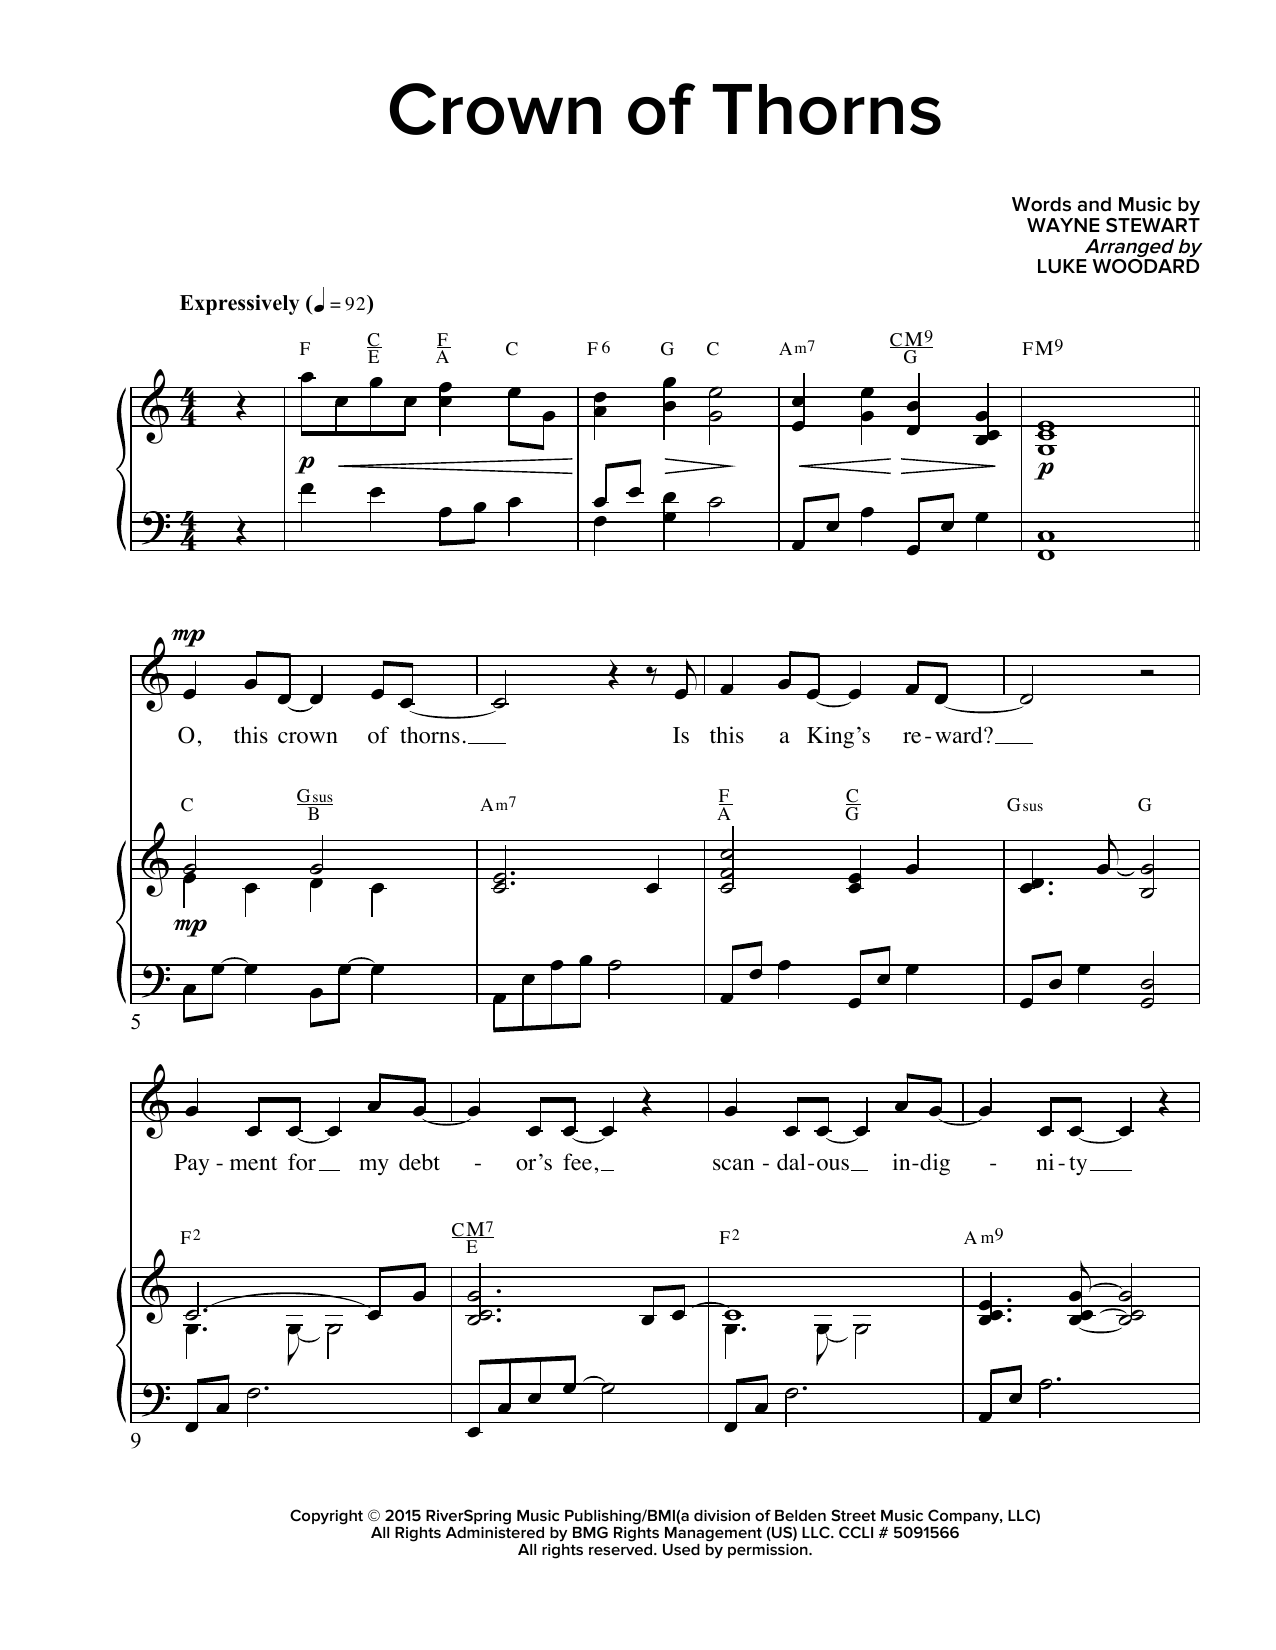 Wayne Stewart Crown Of Thorns (arr. Luke Woodard) Sheet Music Notes & Chords for Piano & Vocal - Download or Print PDF